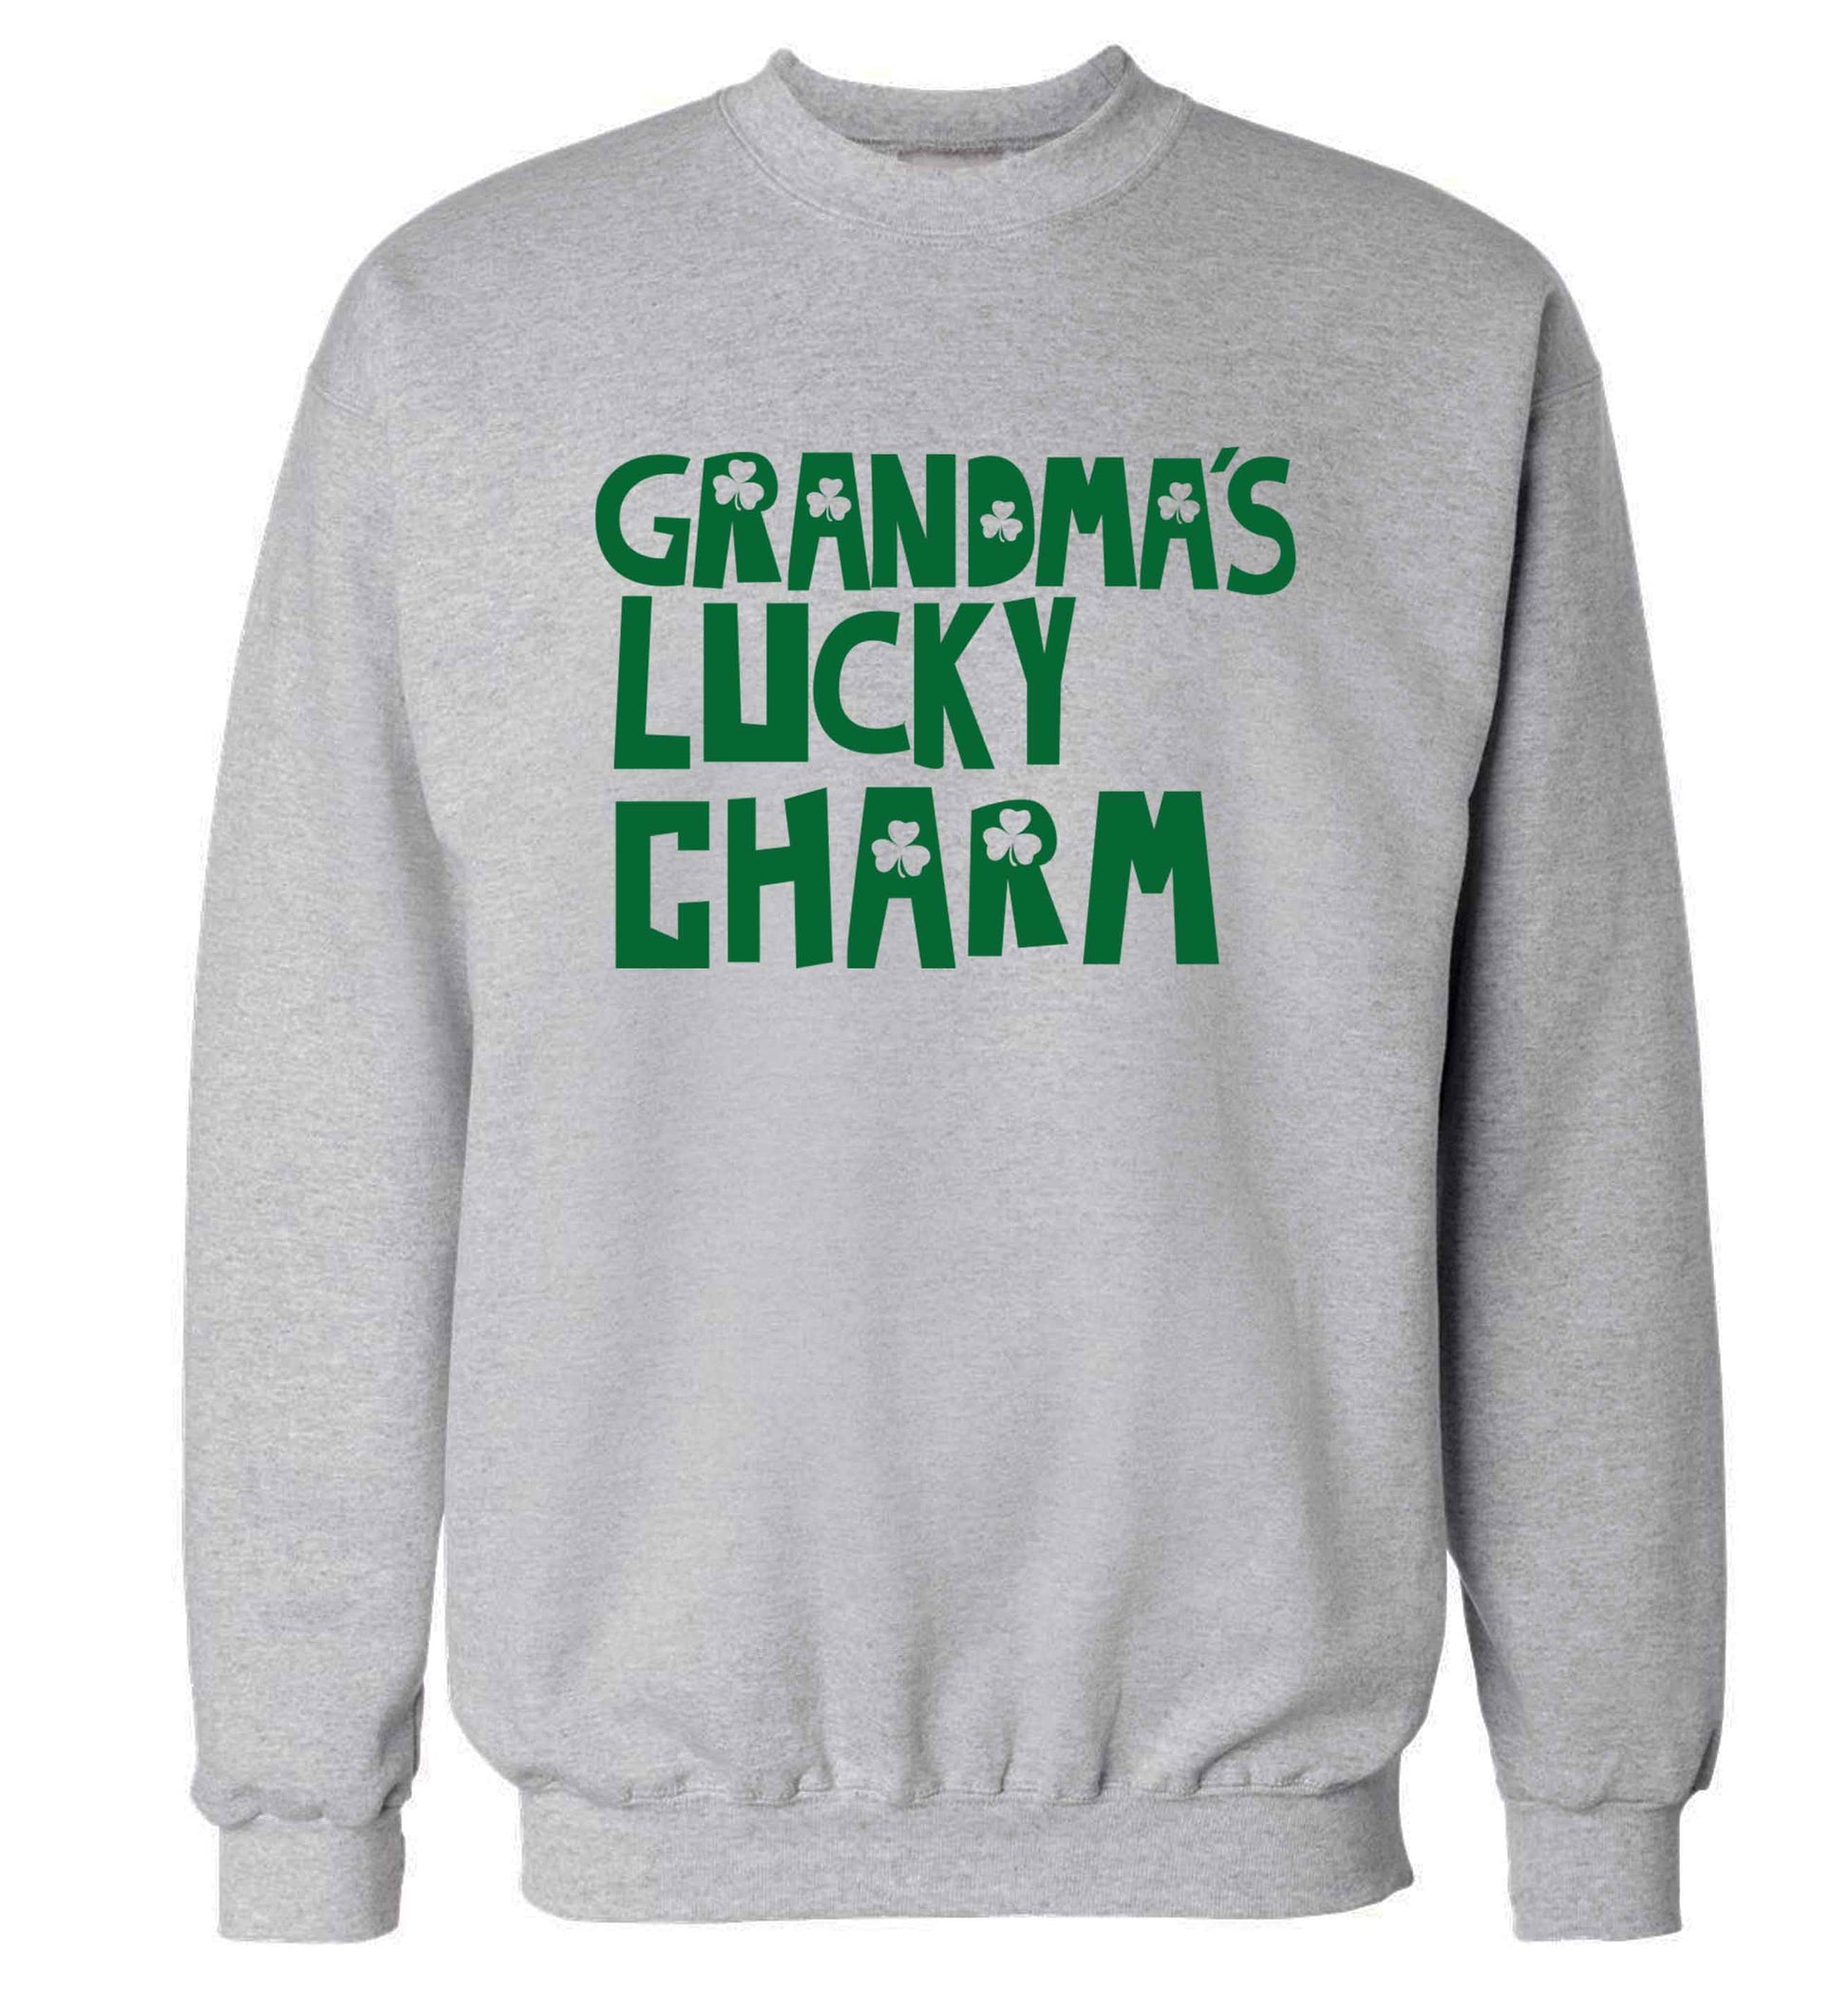 Grandma's lucky charm adult's unisex grey sweater 2XL